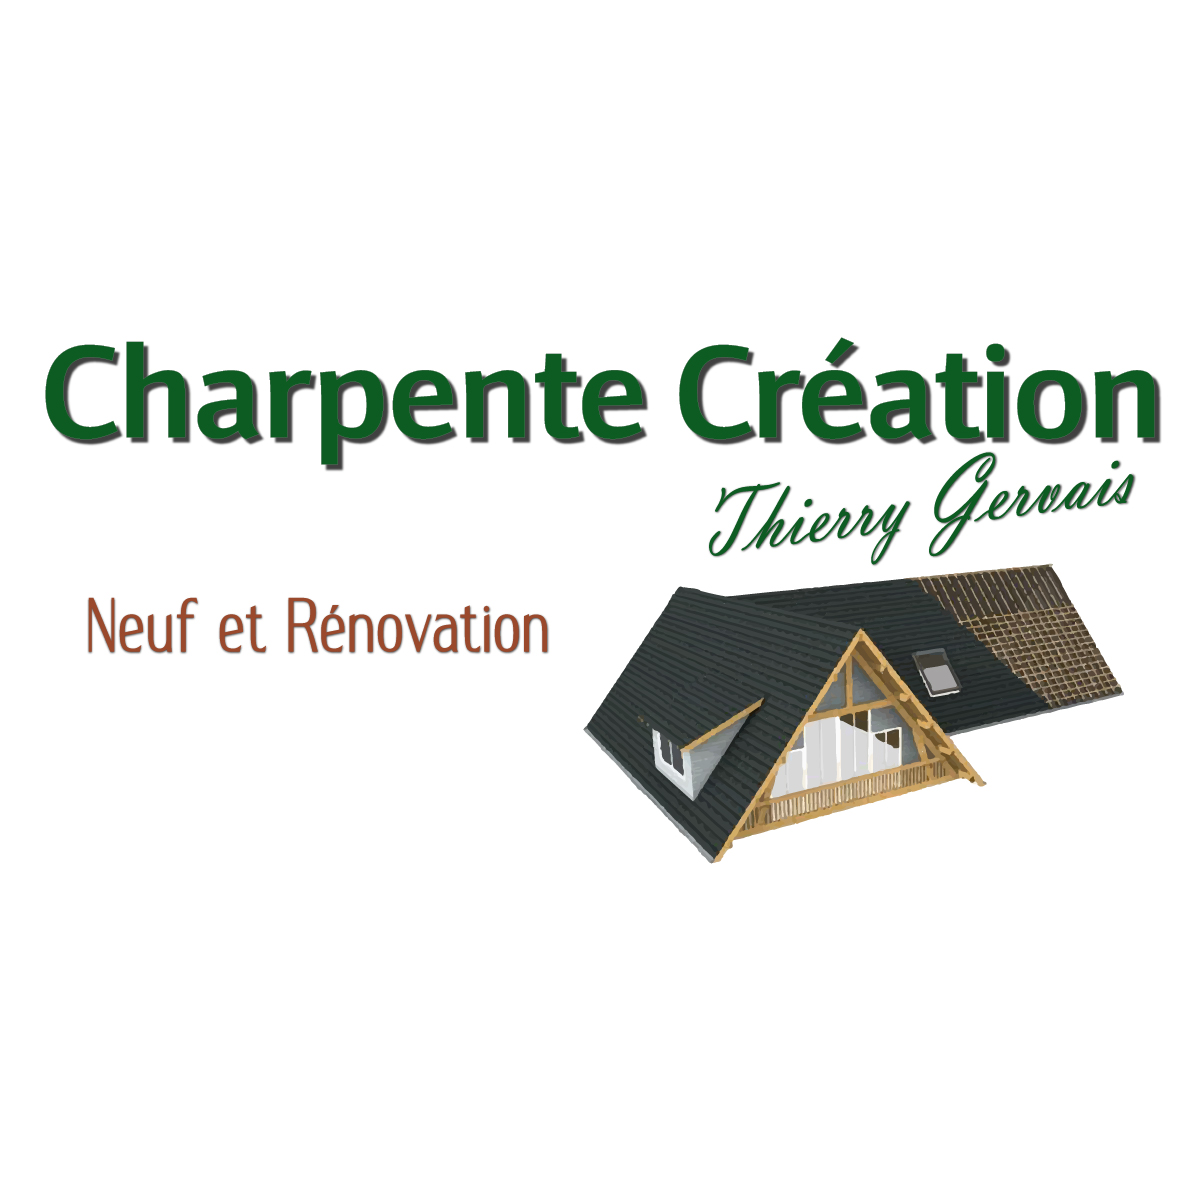 (c) Charpente-creation.com